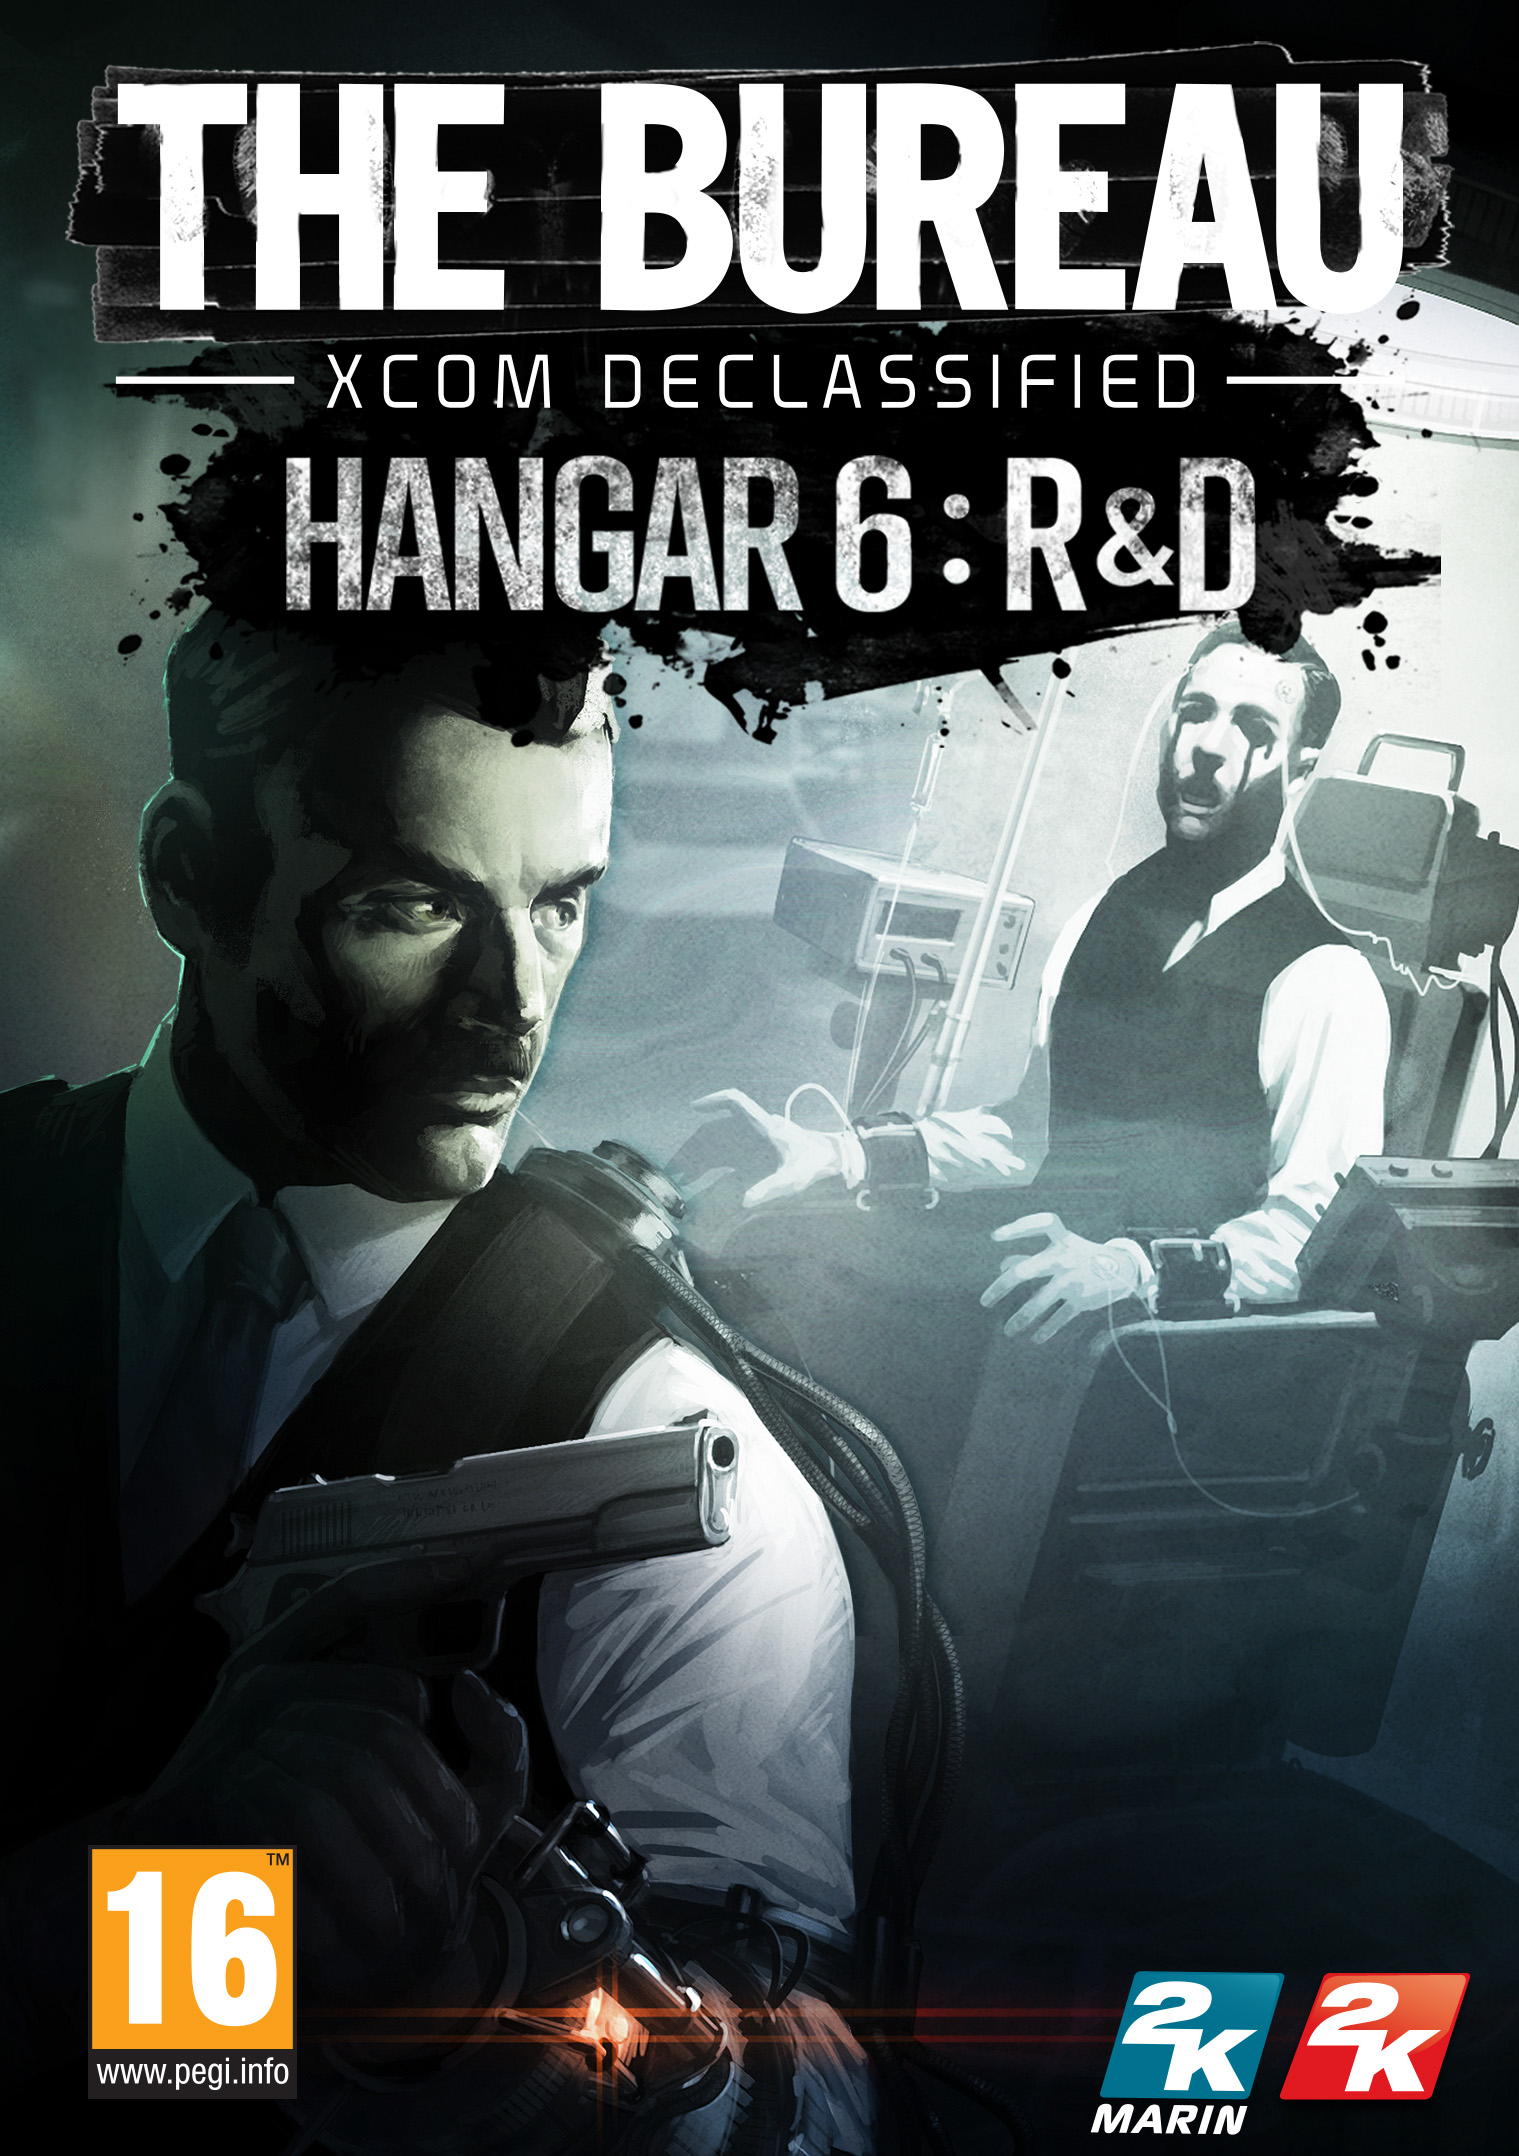 The Bureau: XCOM Declassified – Hangar 6 R&D DLC